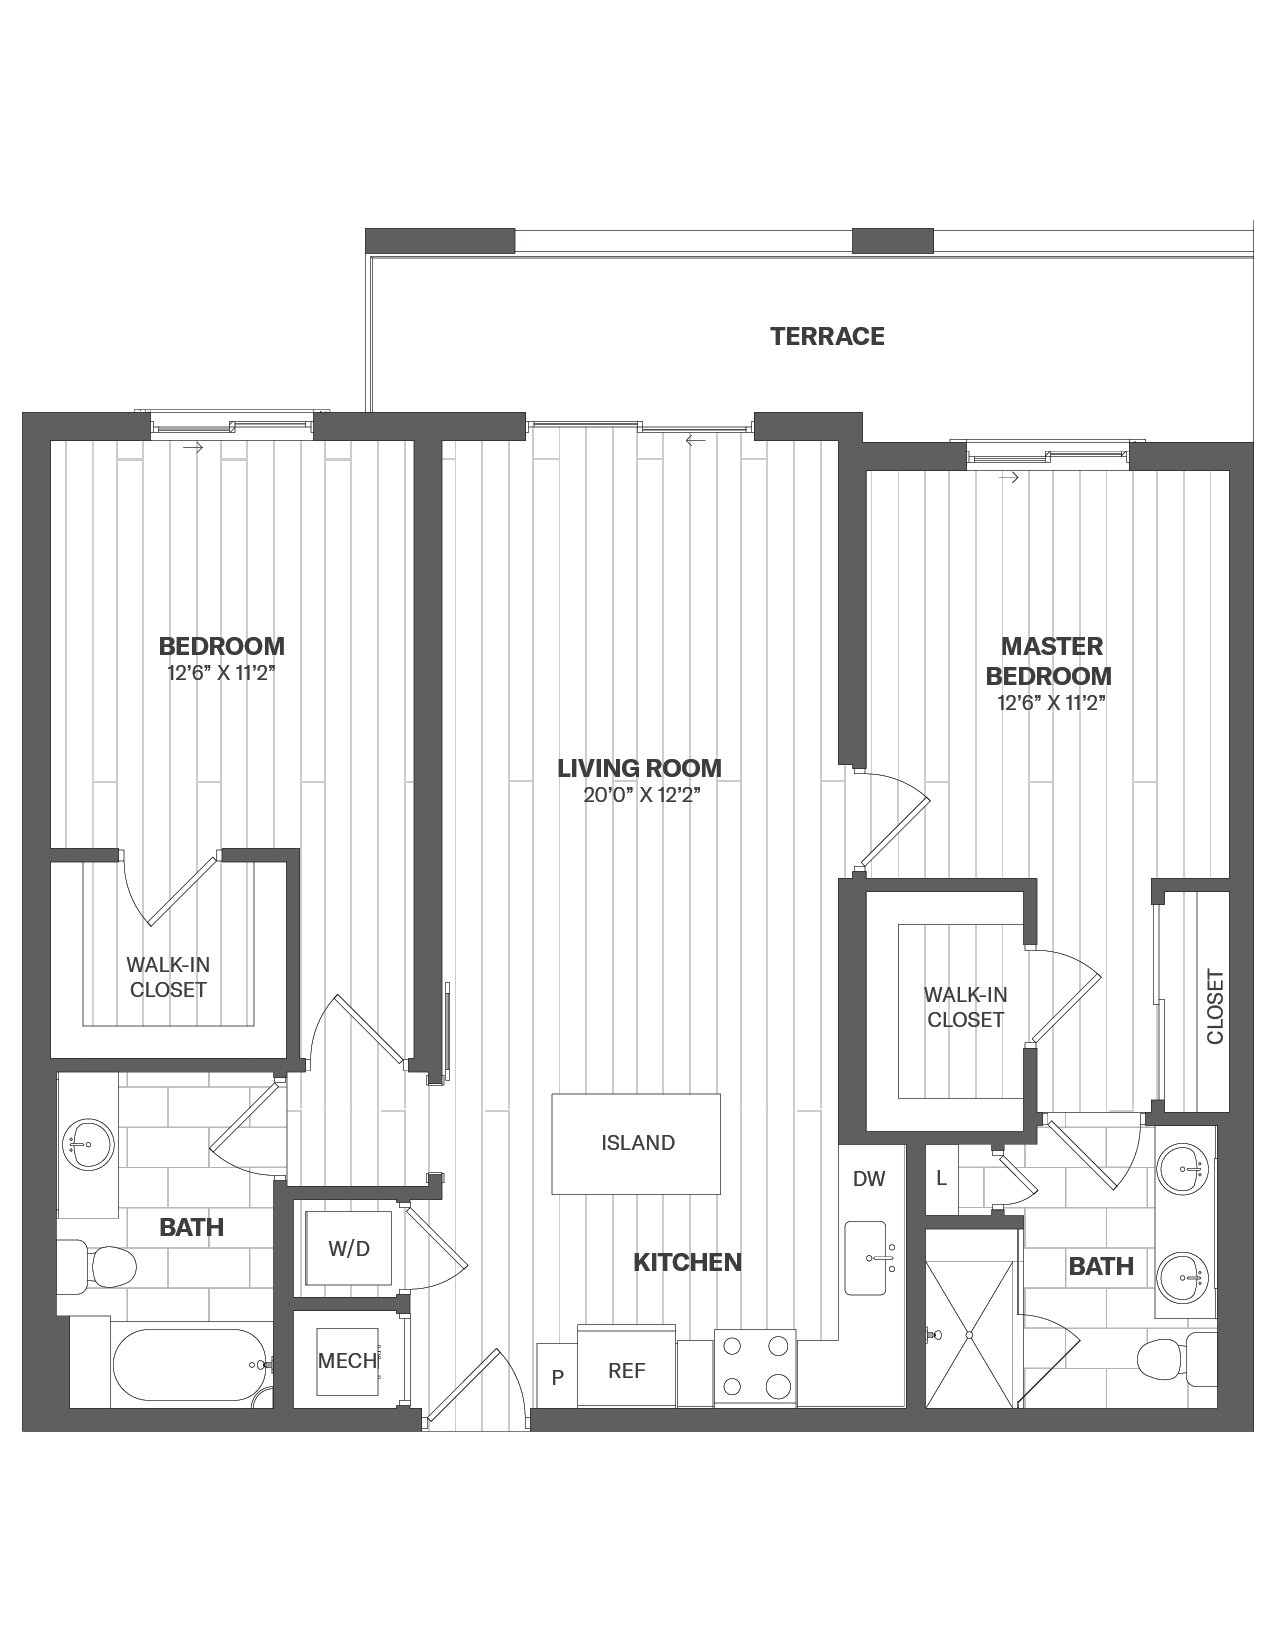 Apartment 300 floorplan